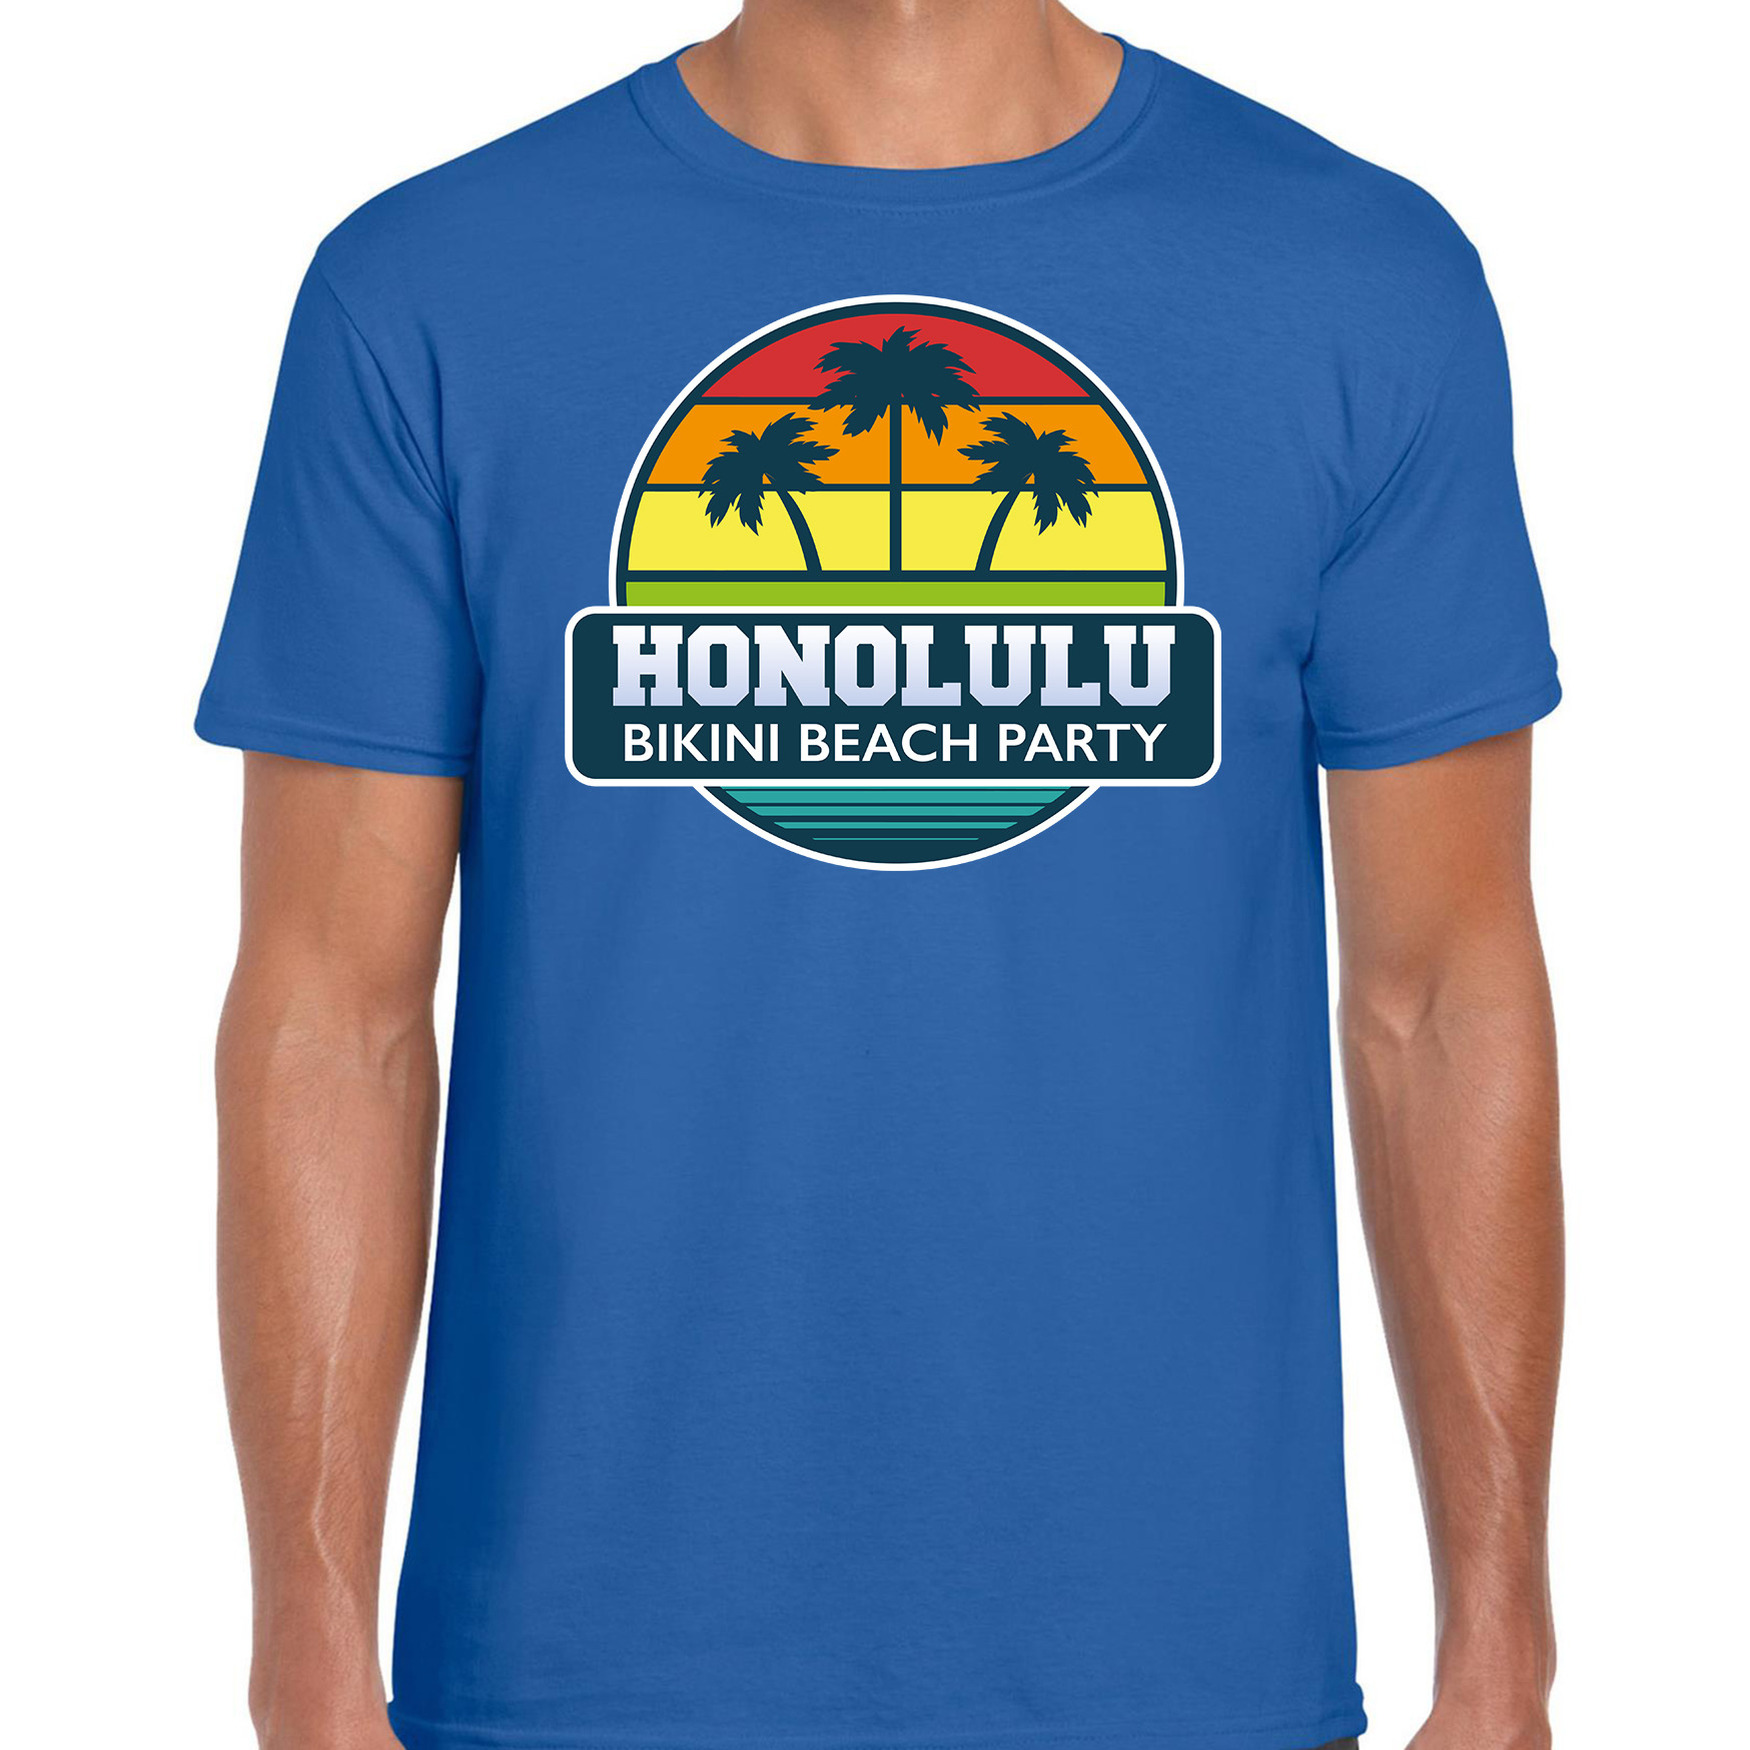 Honolulu bikini beach party shirt beach-strandfeest vakantie outfit-kleding blauw voor heren